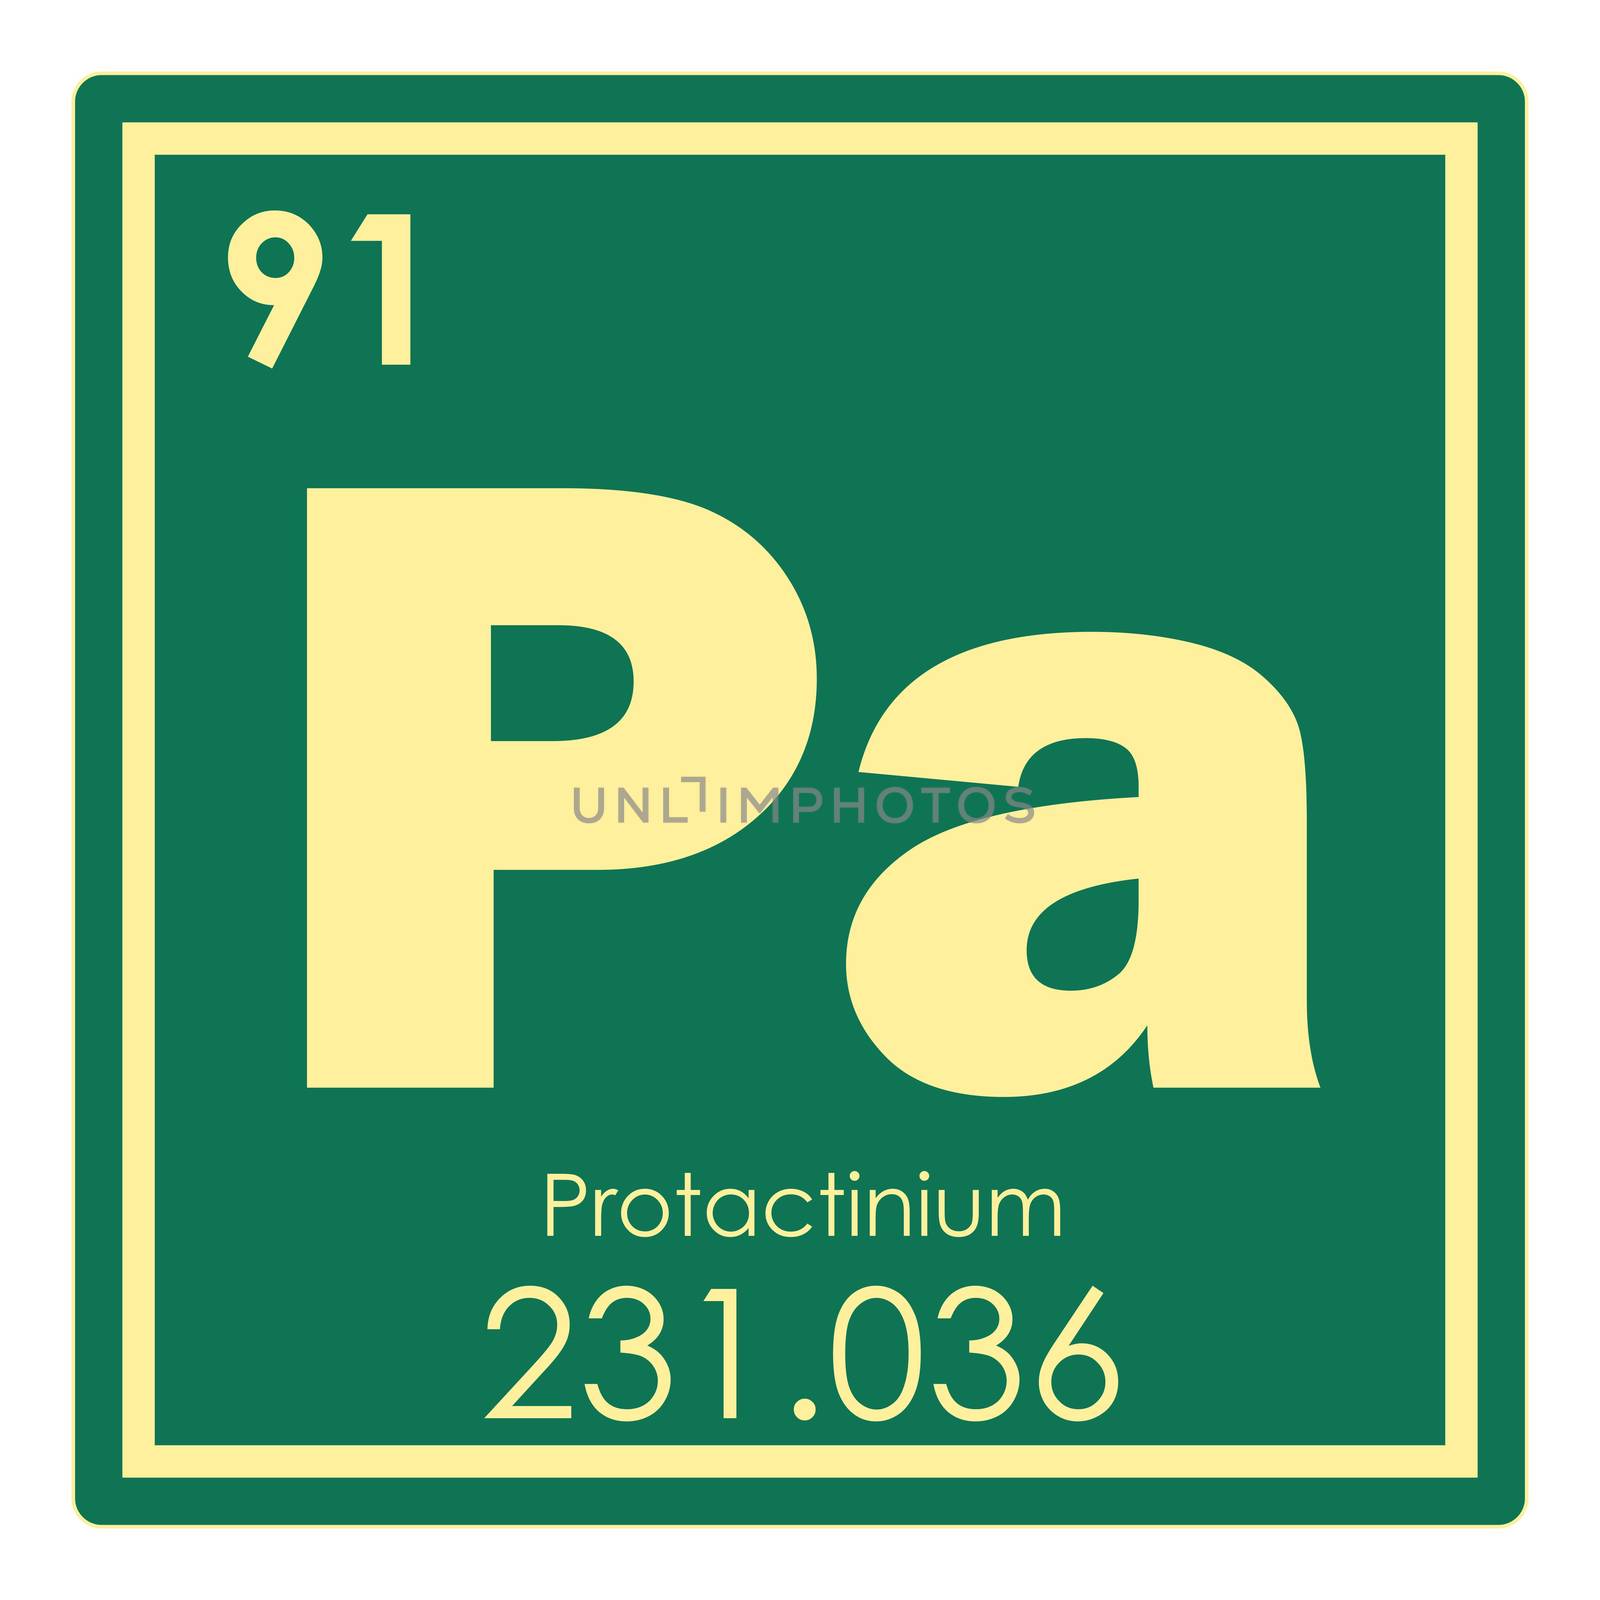 Protactinium chemical element by tony4urban